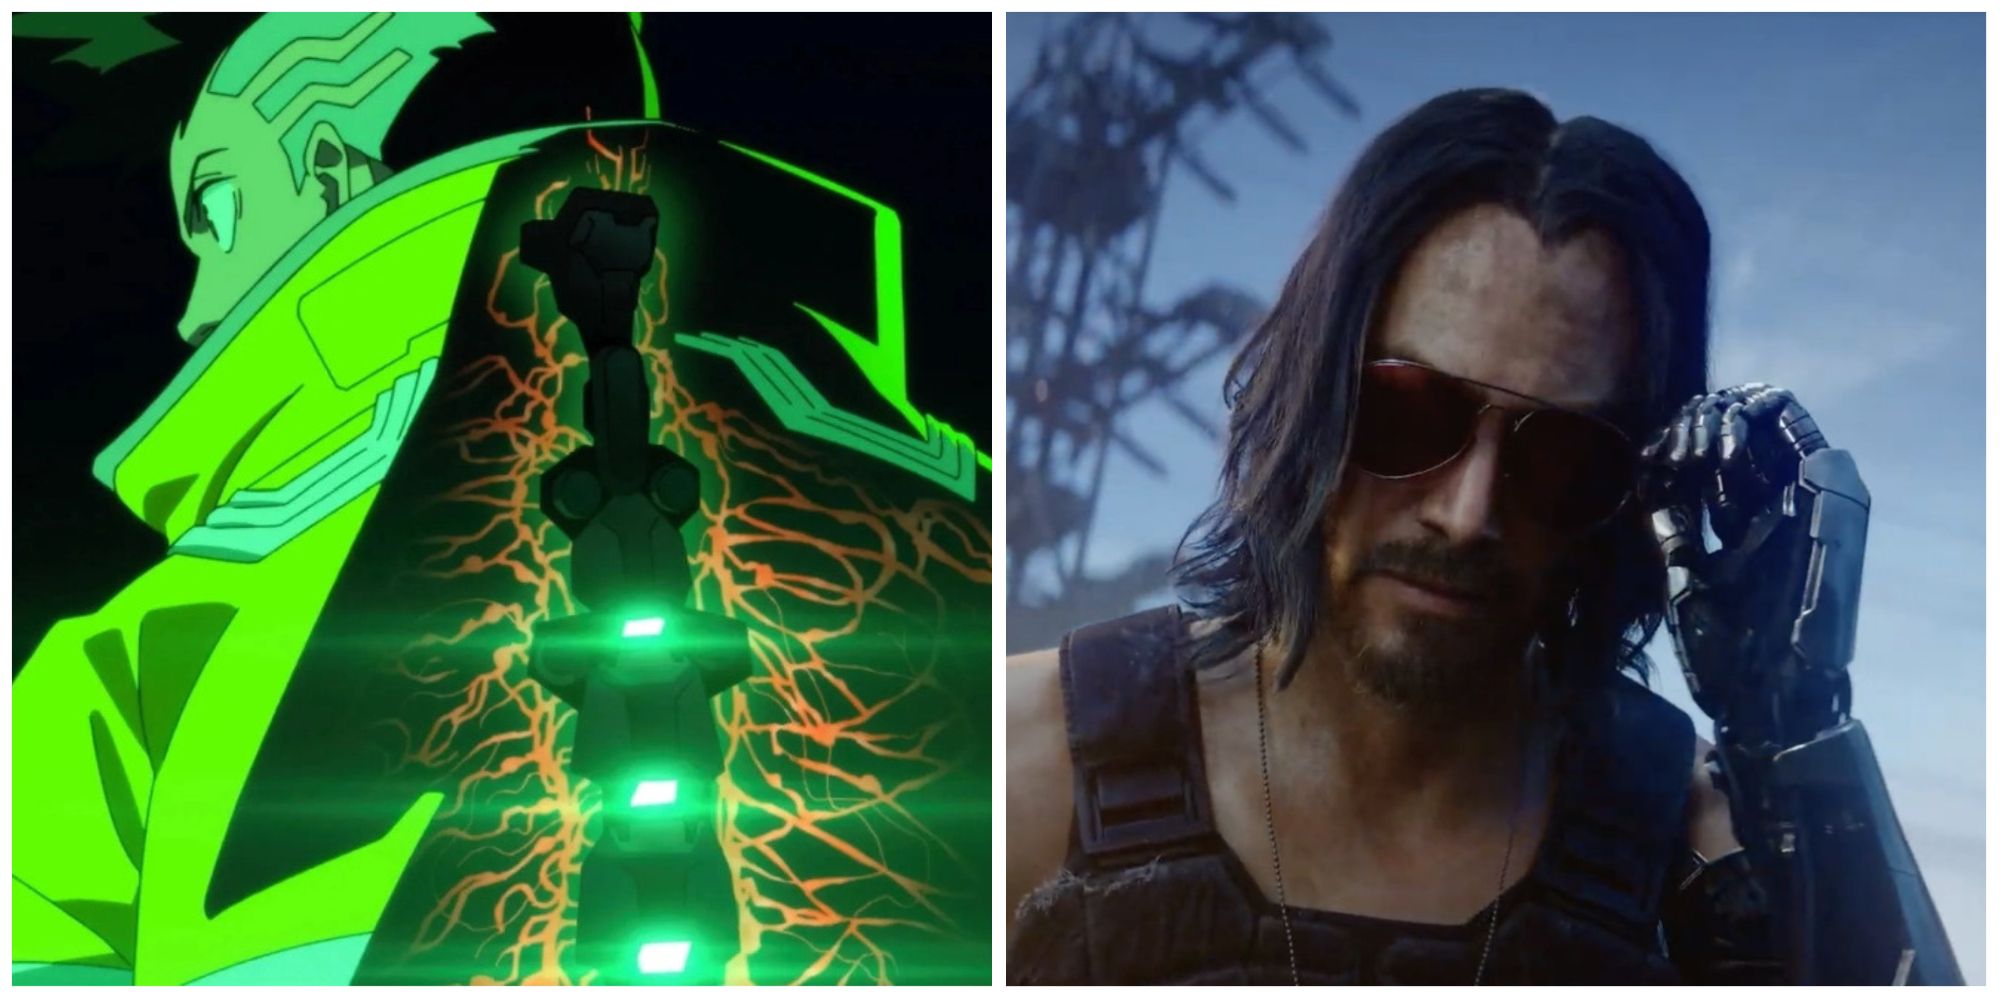 Edgerunners & Cyberpunk 2077 game connections